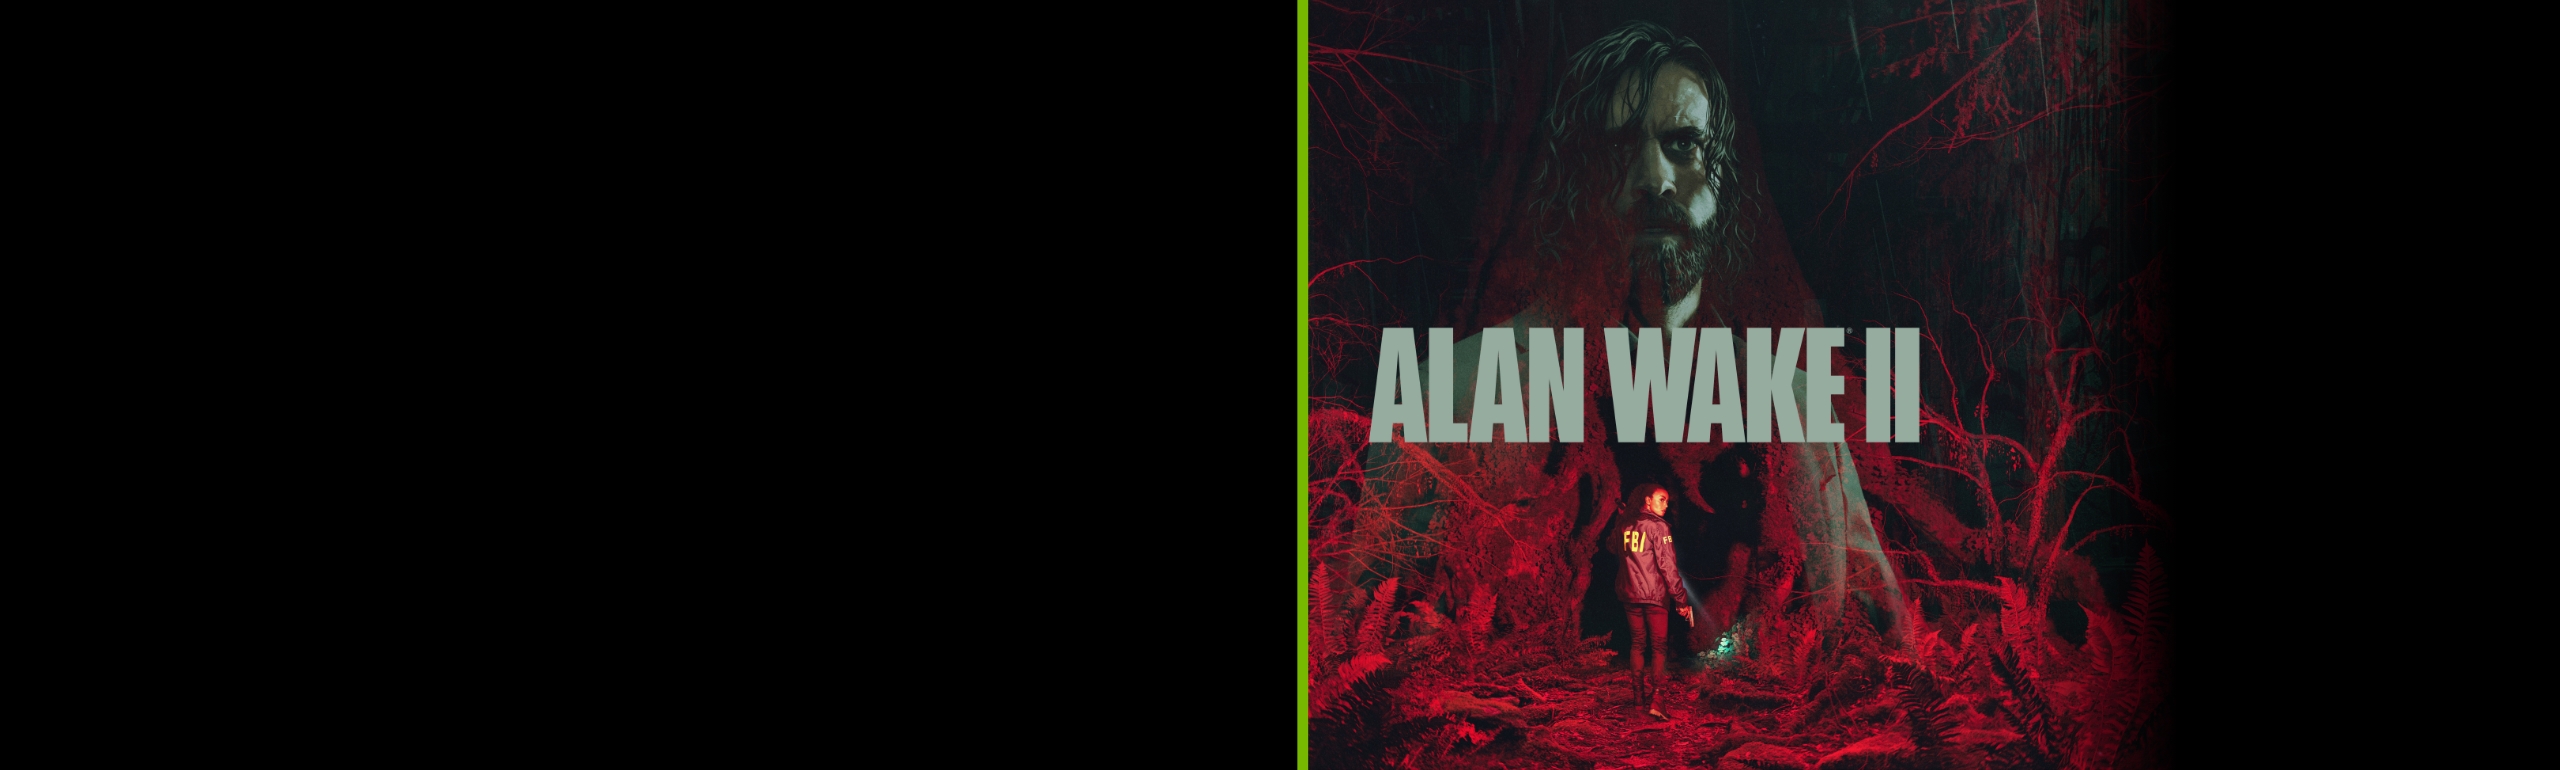 Alan Wake 2 out now